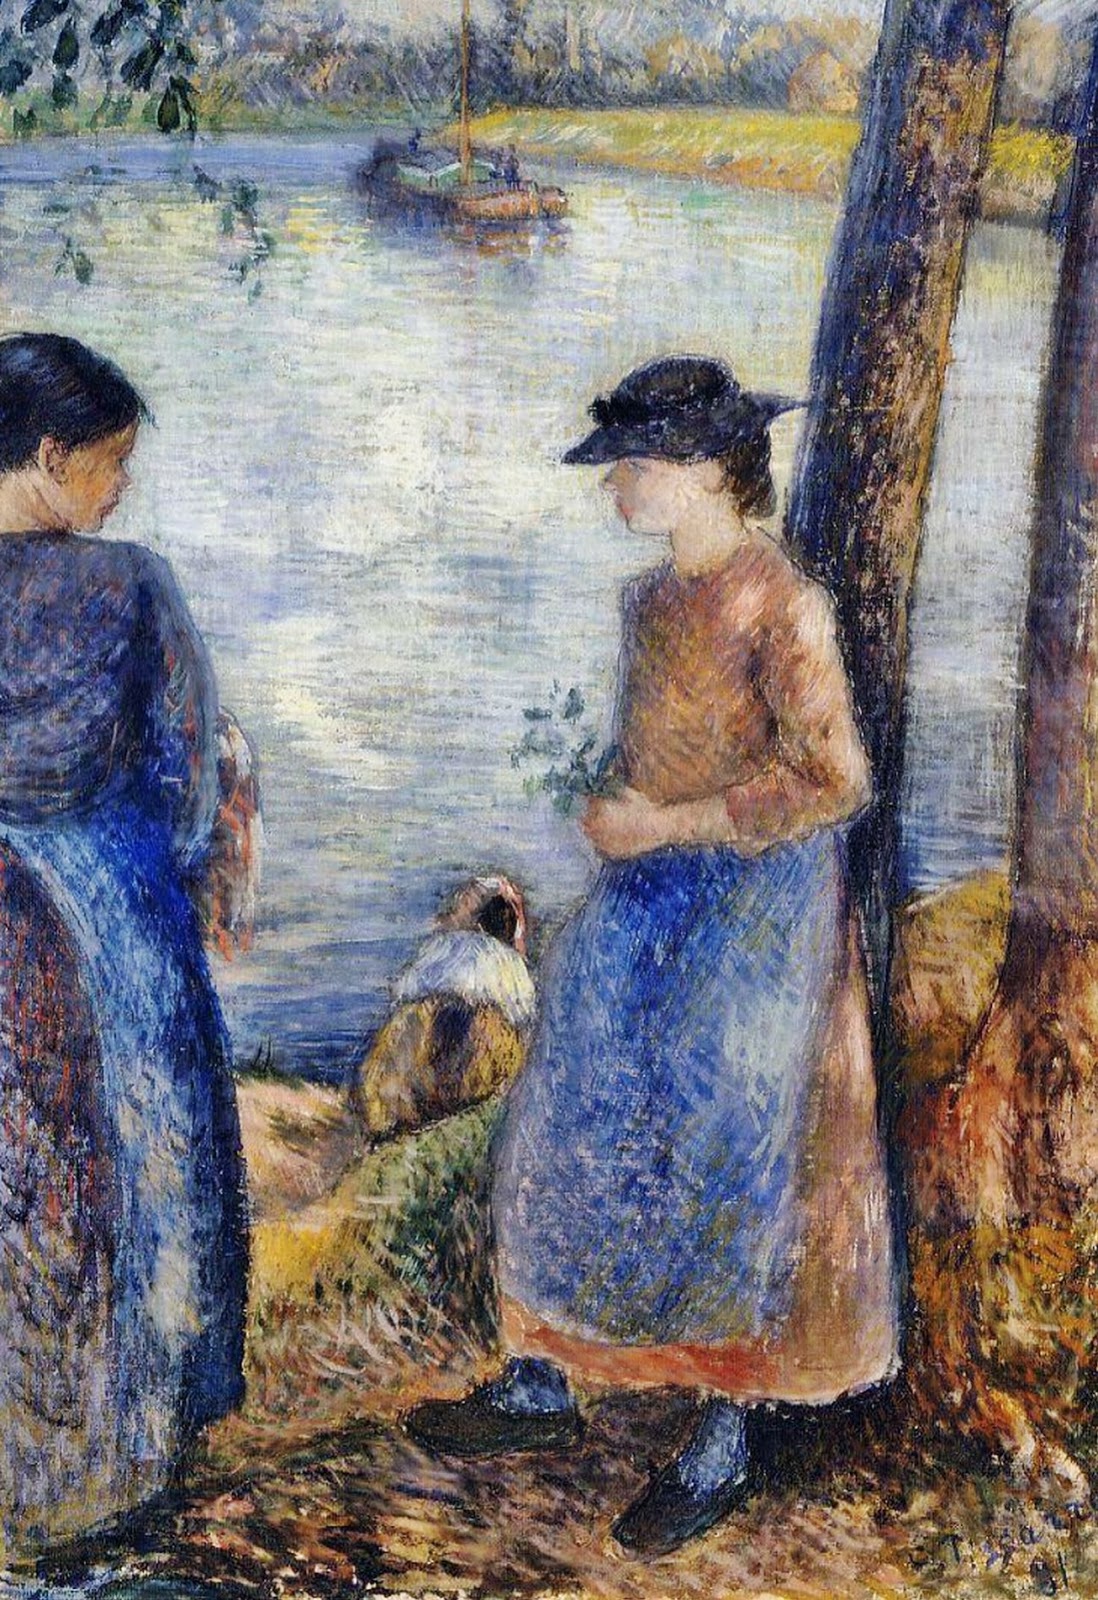 Camille+Pissarro-1830-1903 (338).jpg